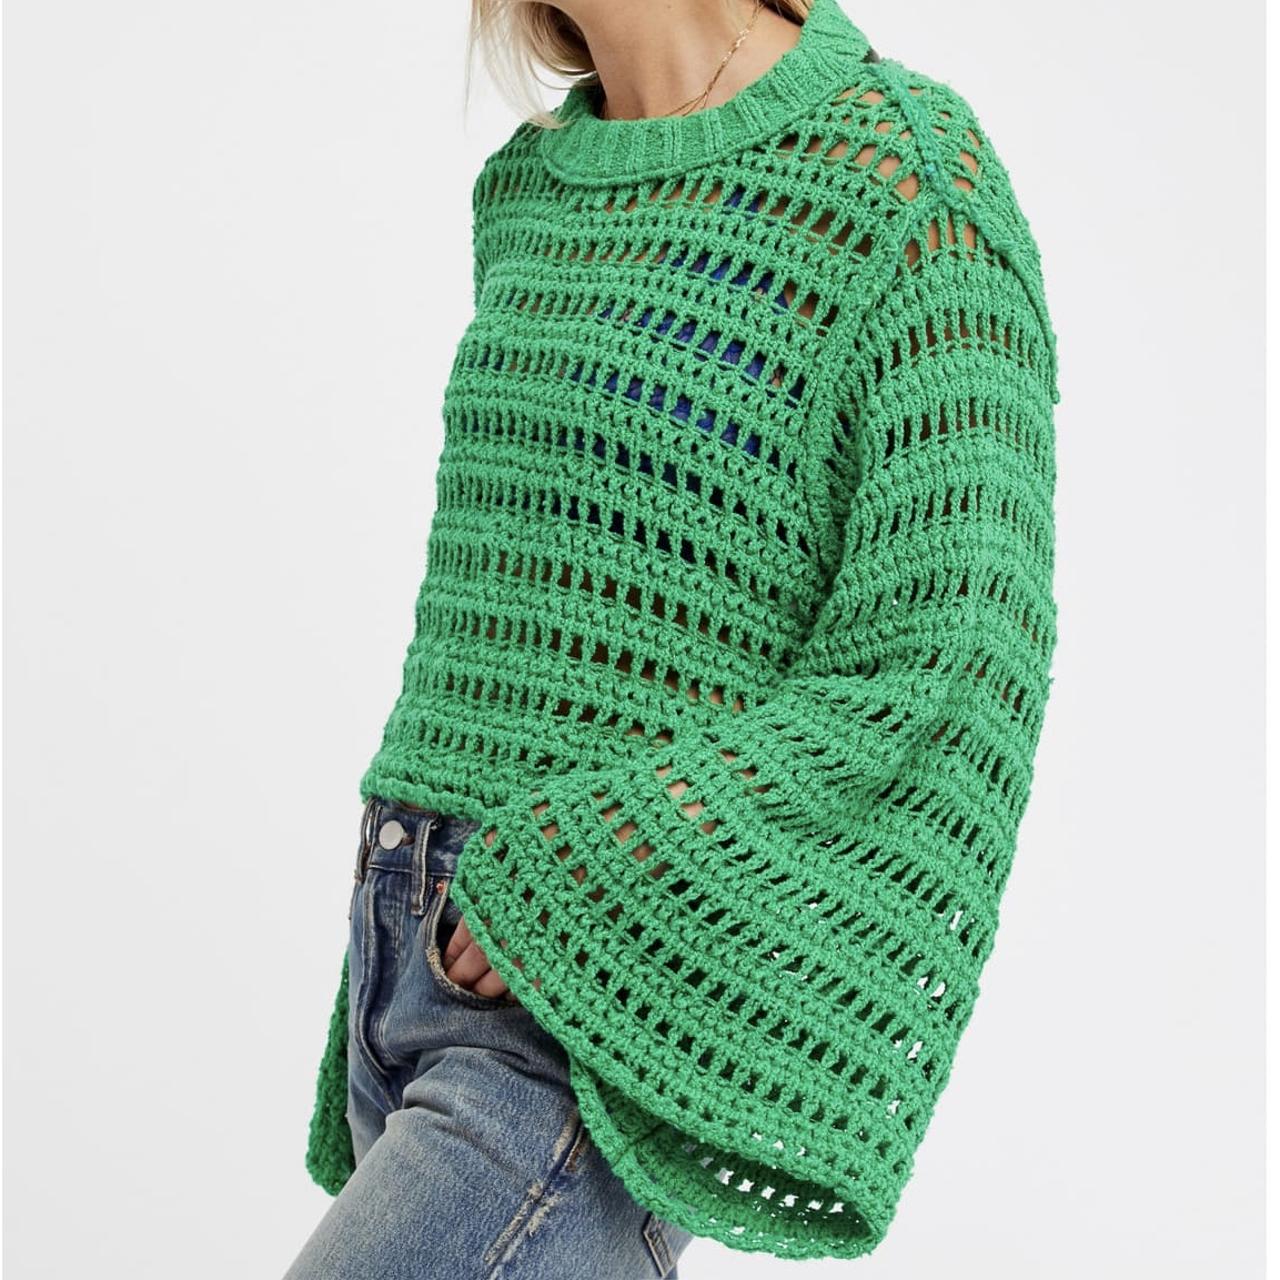 FREE SHIPPING ~ Super cute bright green knit sweater... - Depop